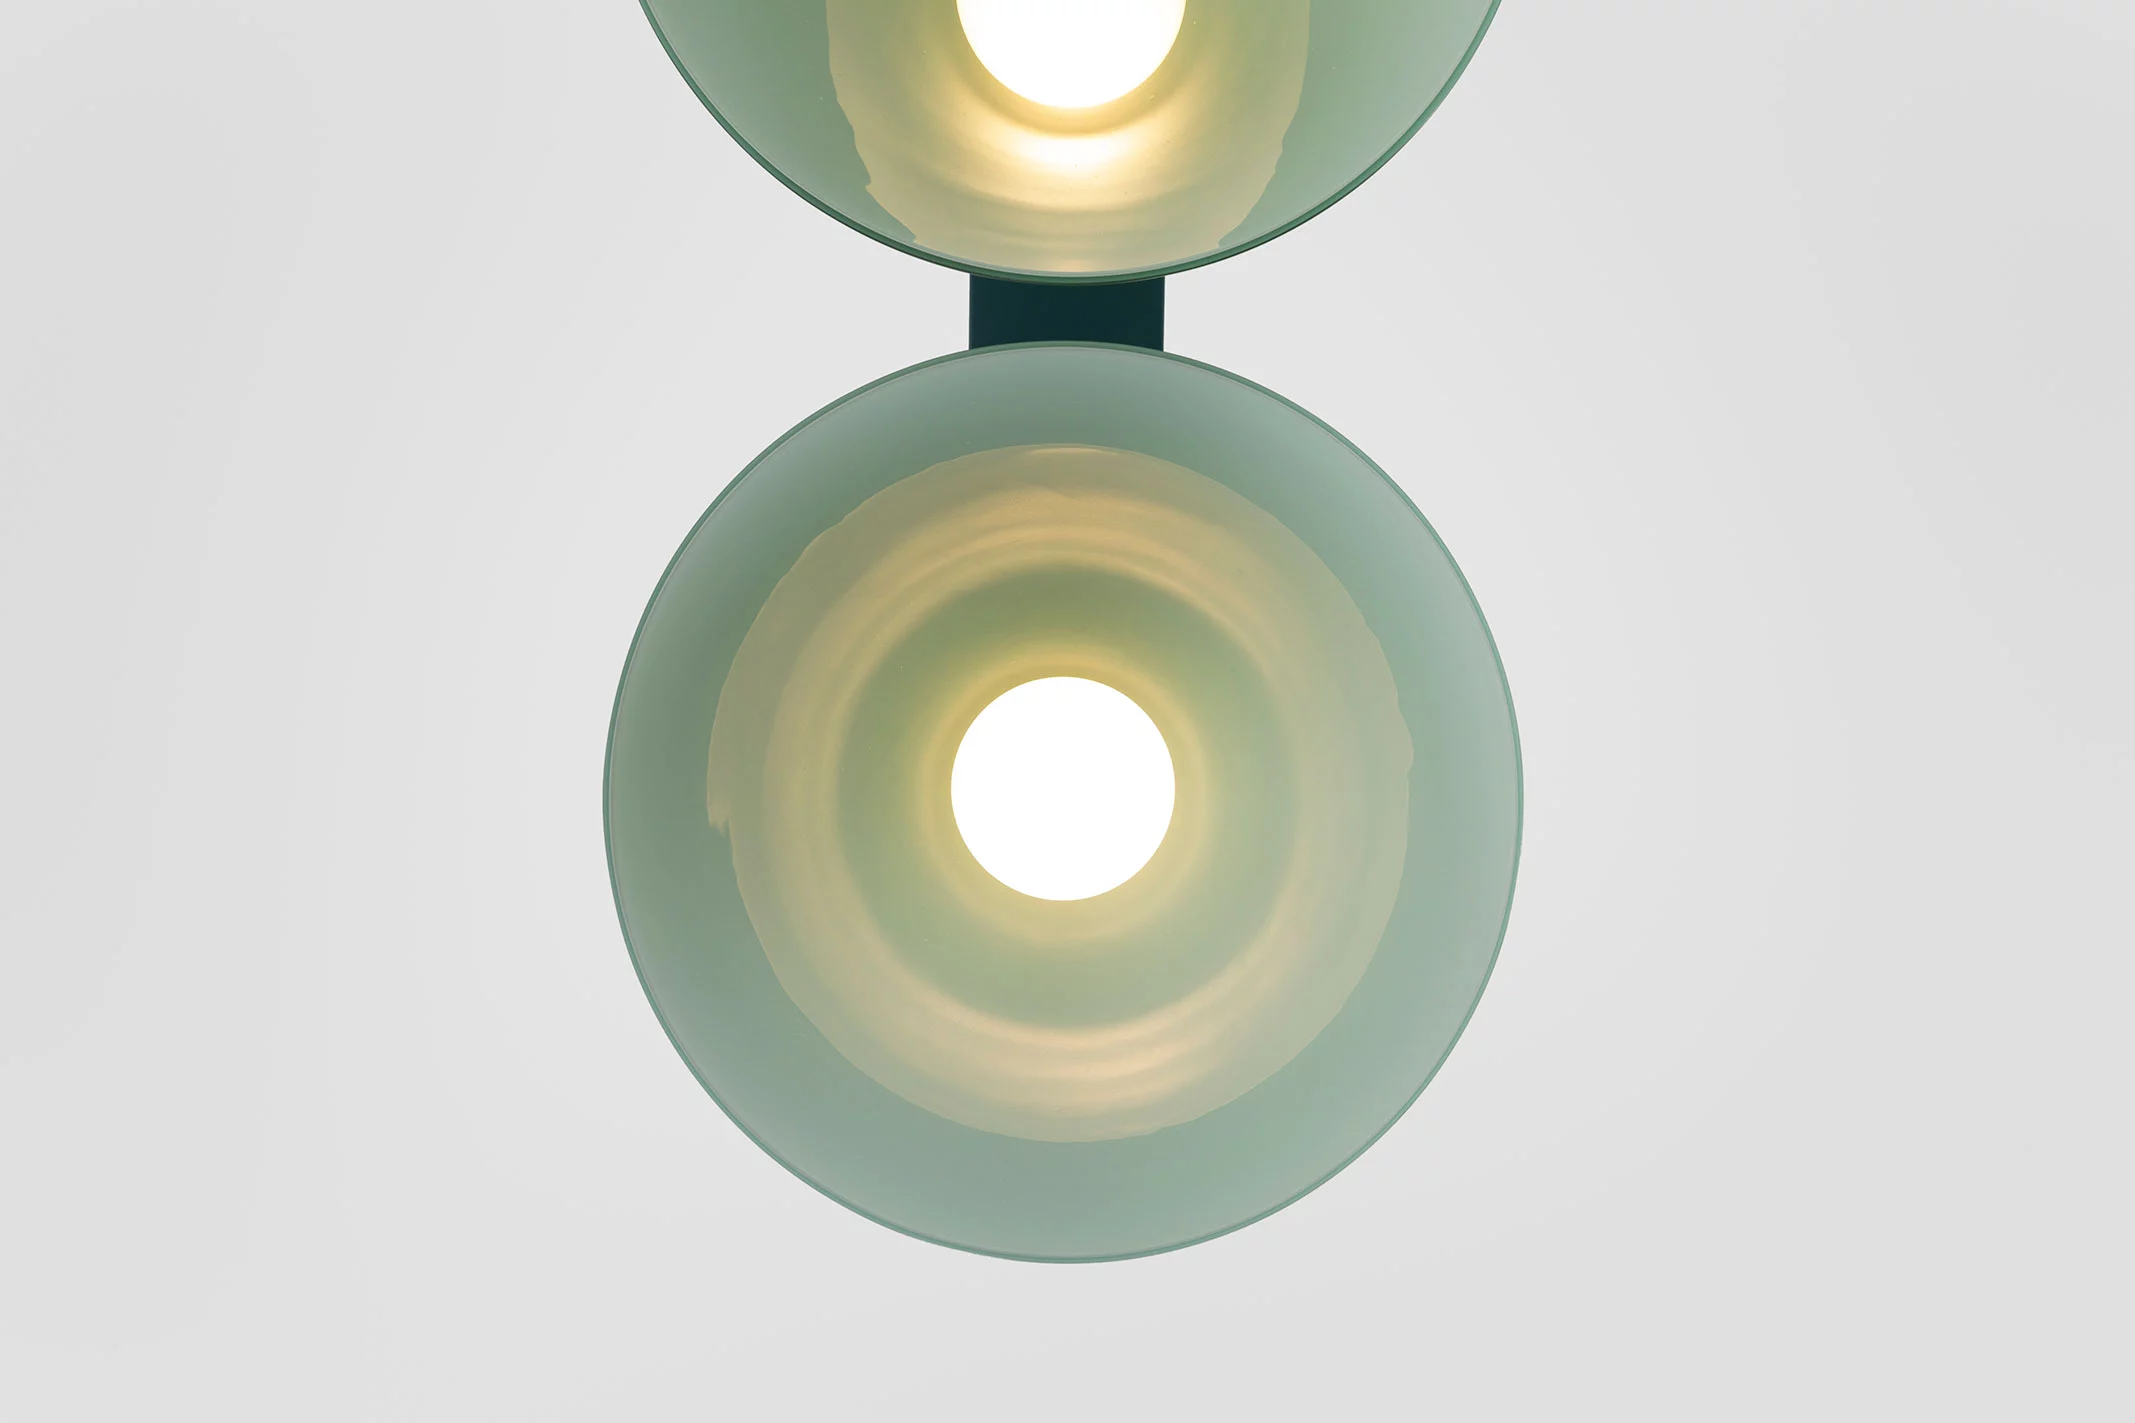 Signal C4 POLYCHROMATIC - Edward Barber and Jay Osgerby - Pendant light - Galerie kreo